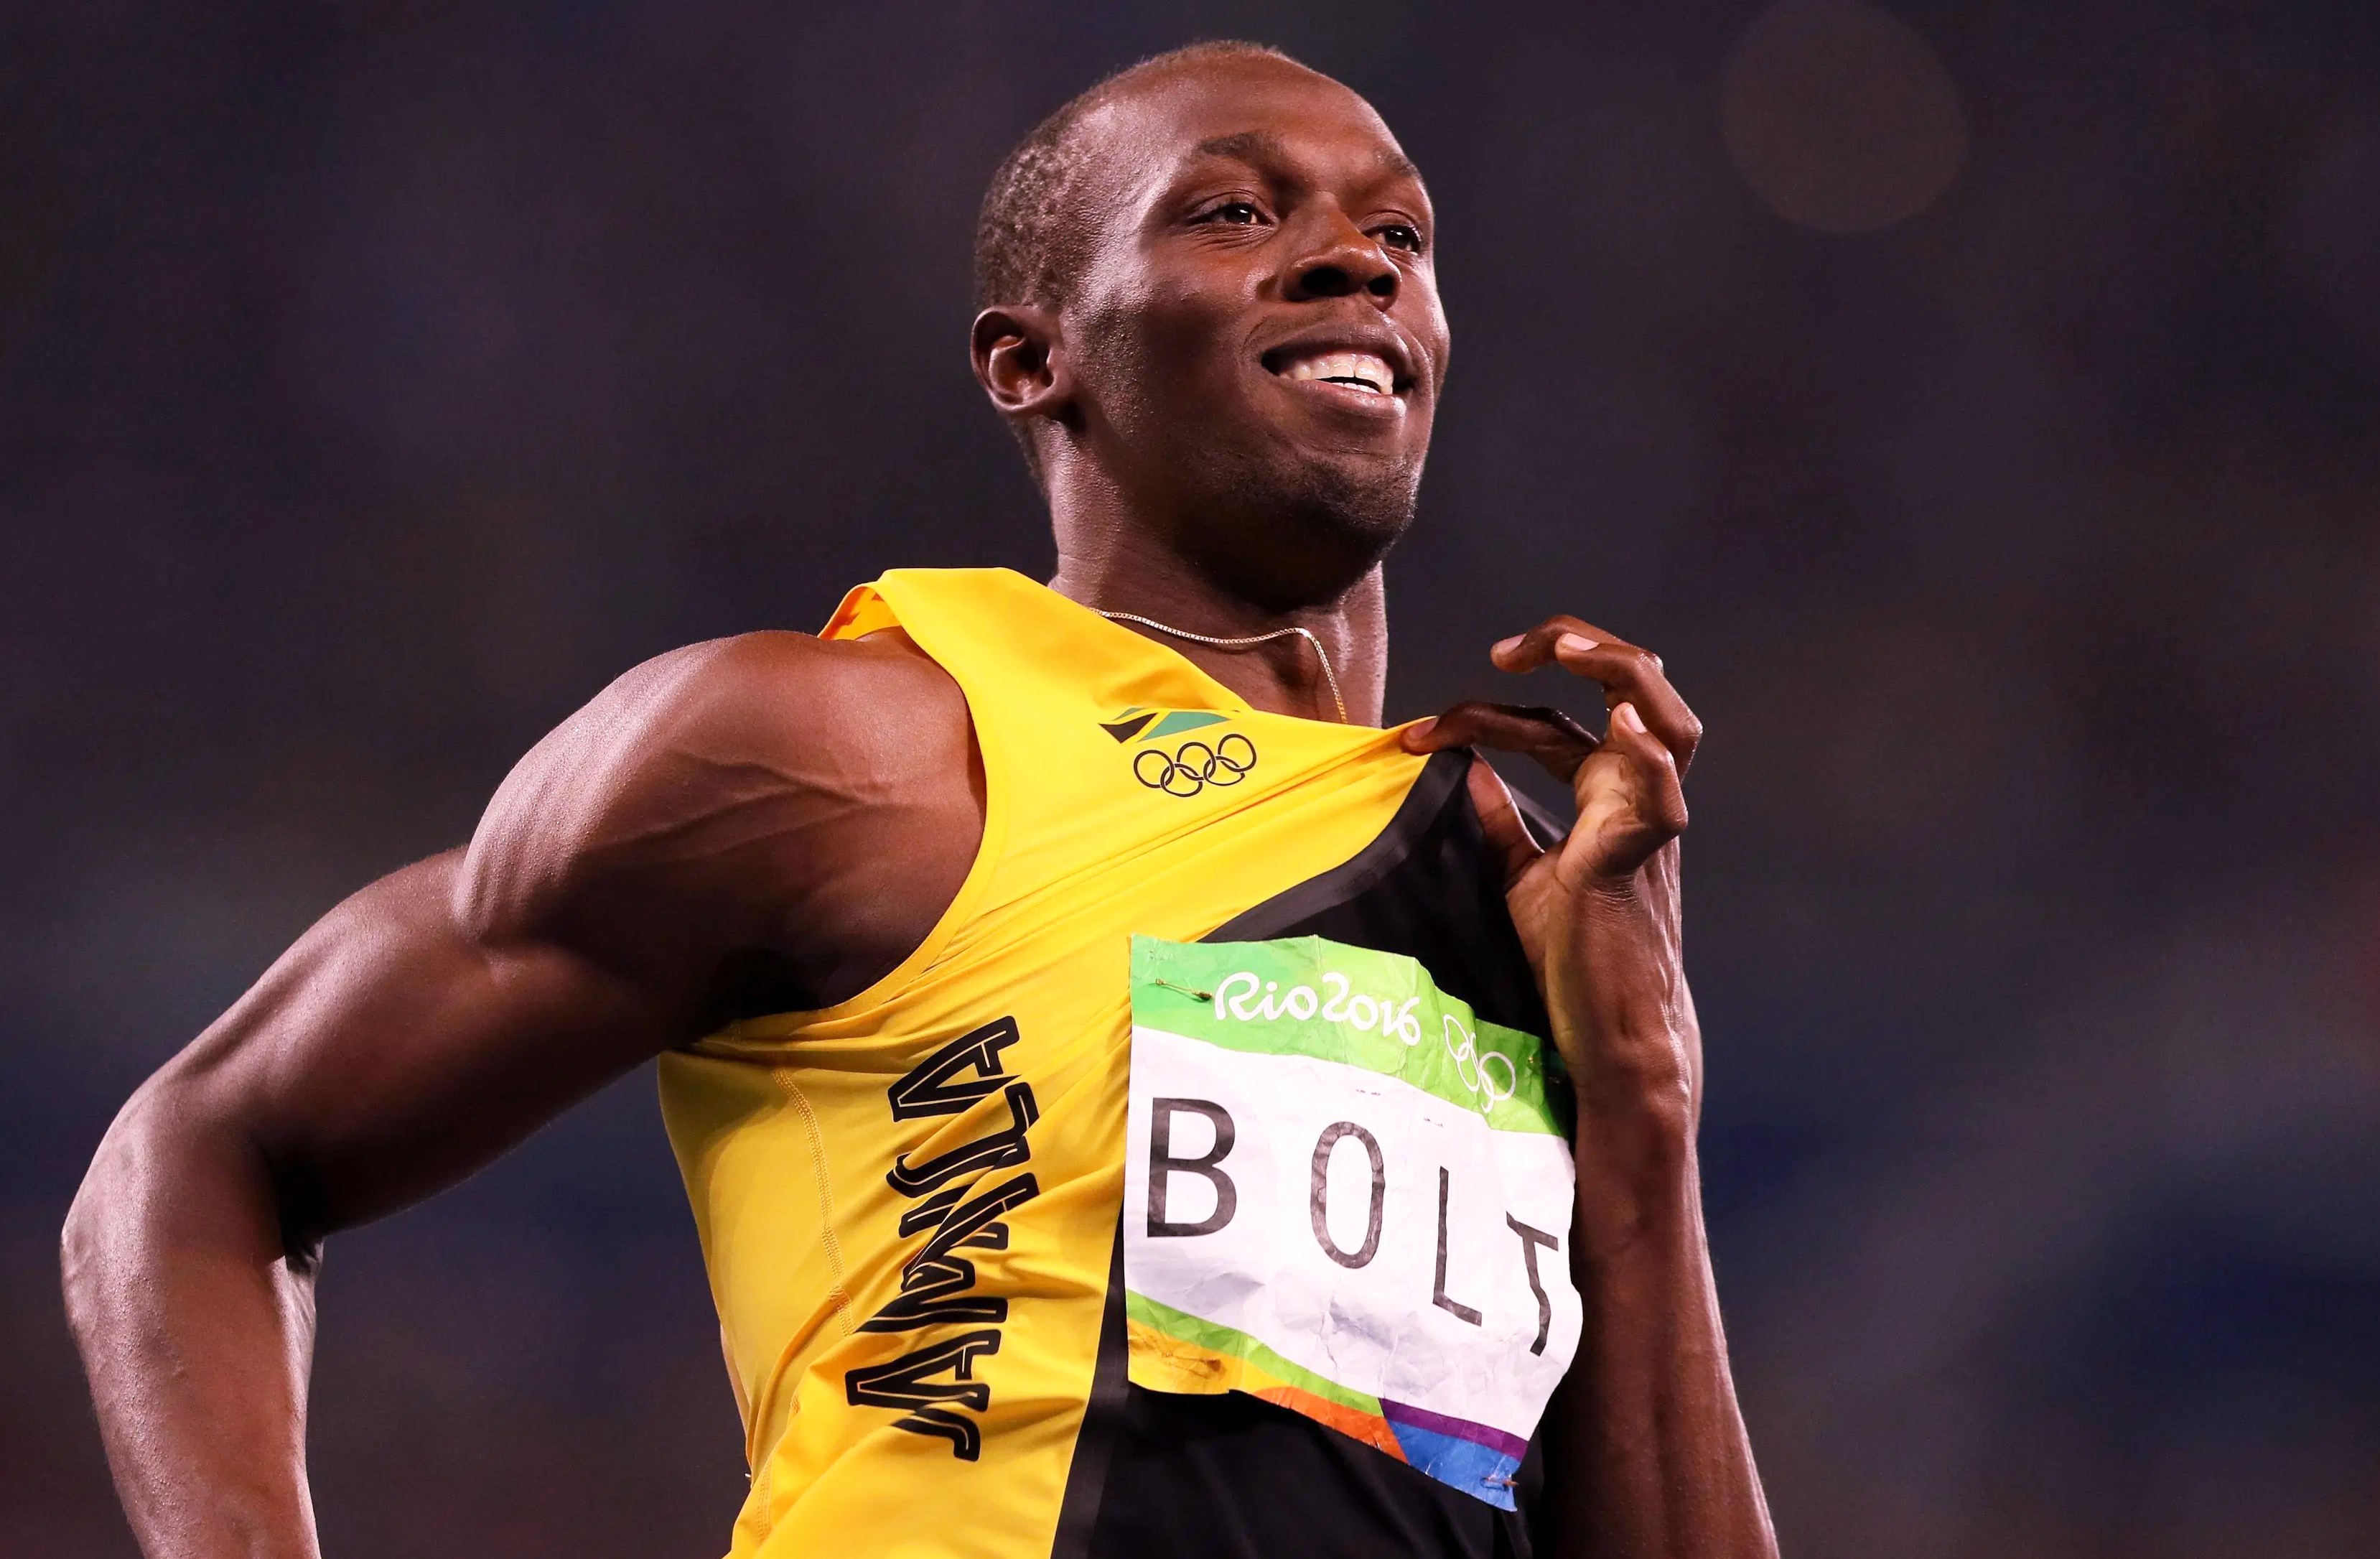 The World Fastest Man: Usain Bolt, Jamaica.